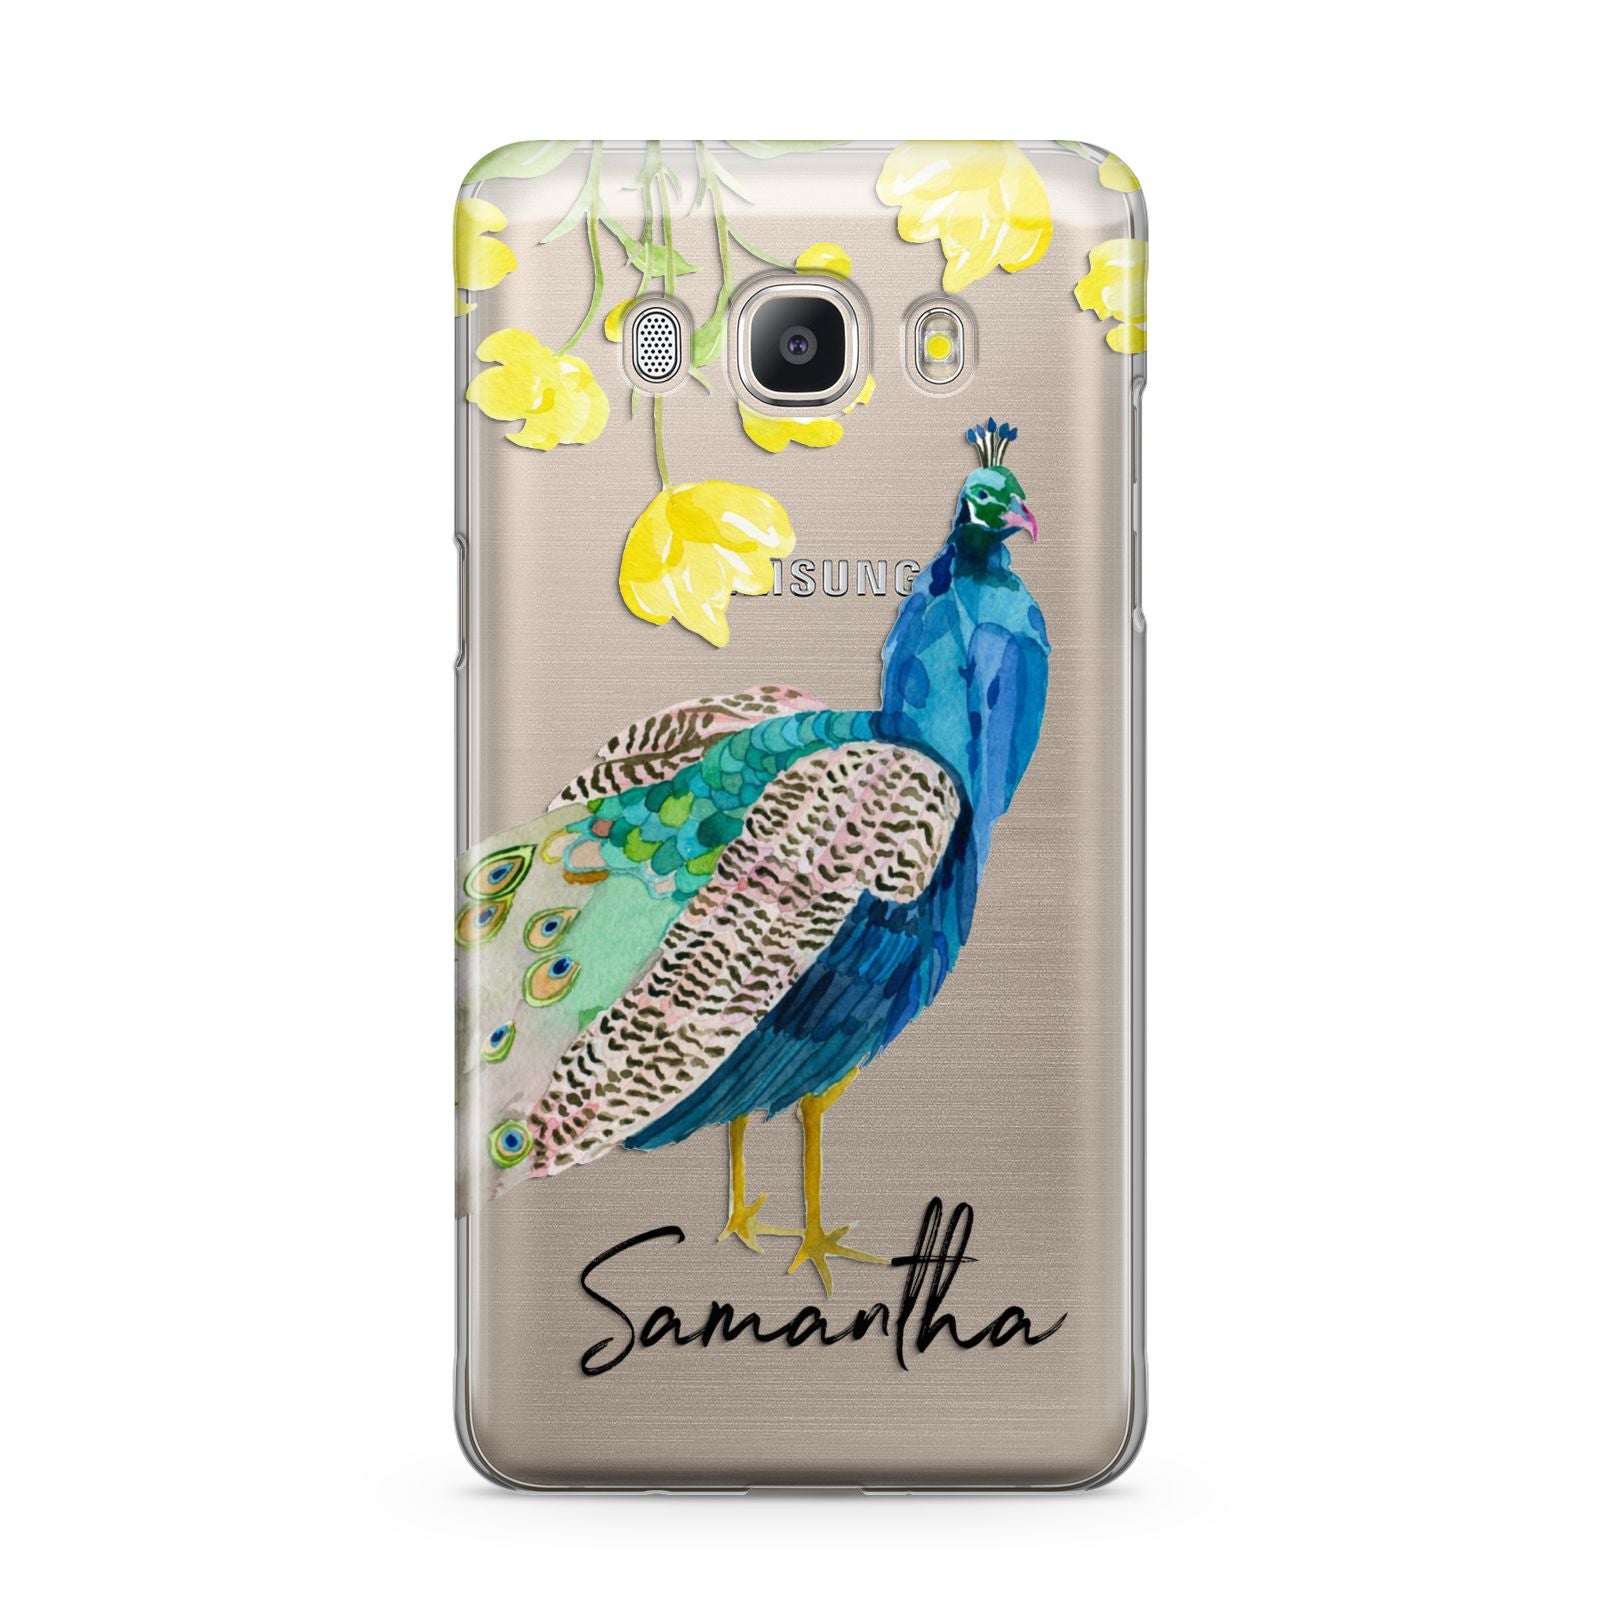 Personalised Peacock Samsung Galaxy J5 2016 Case